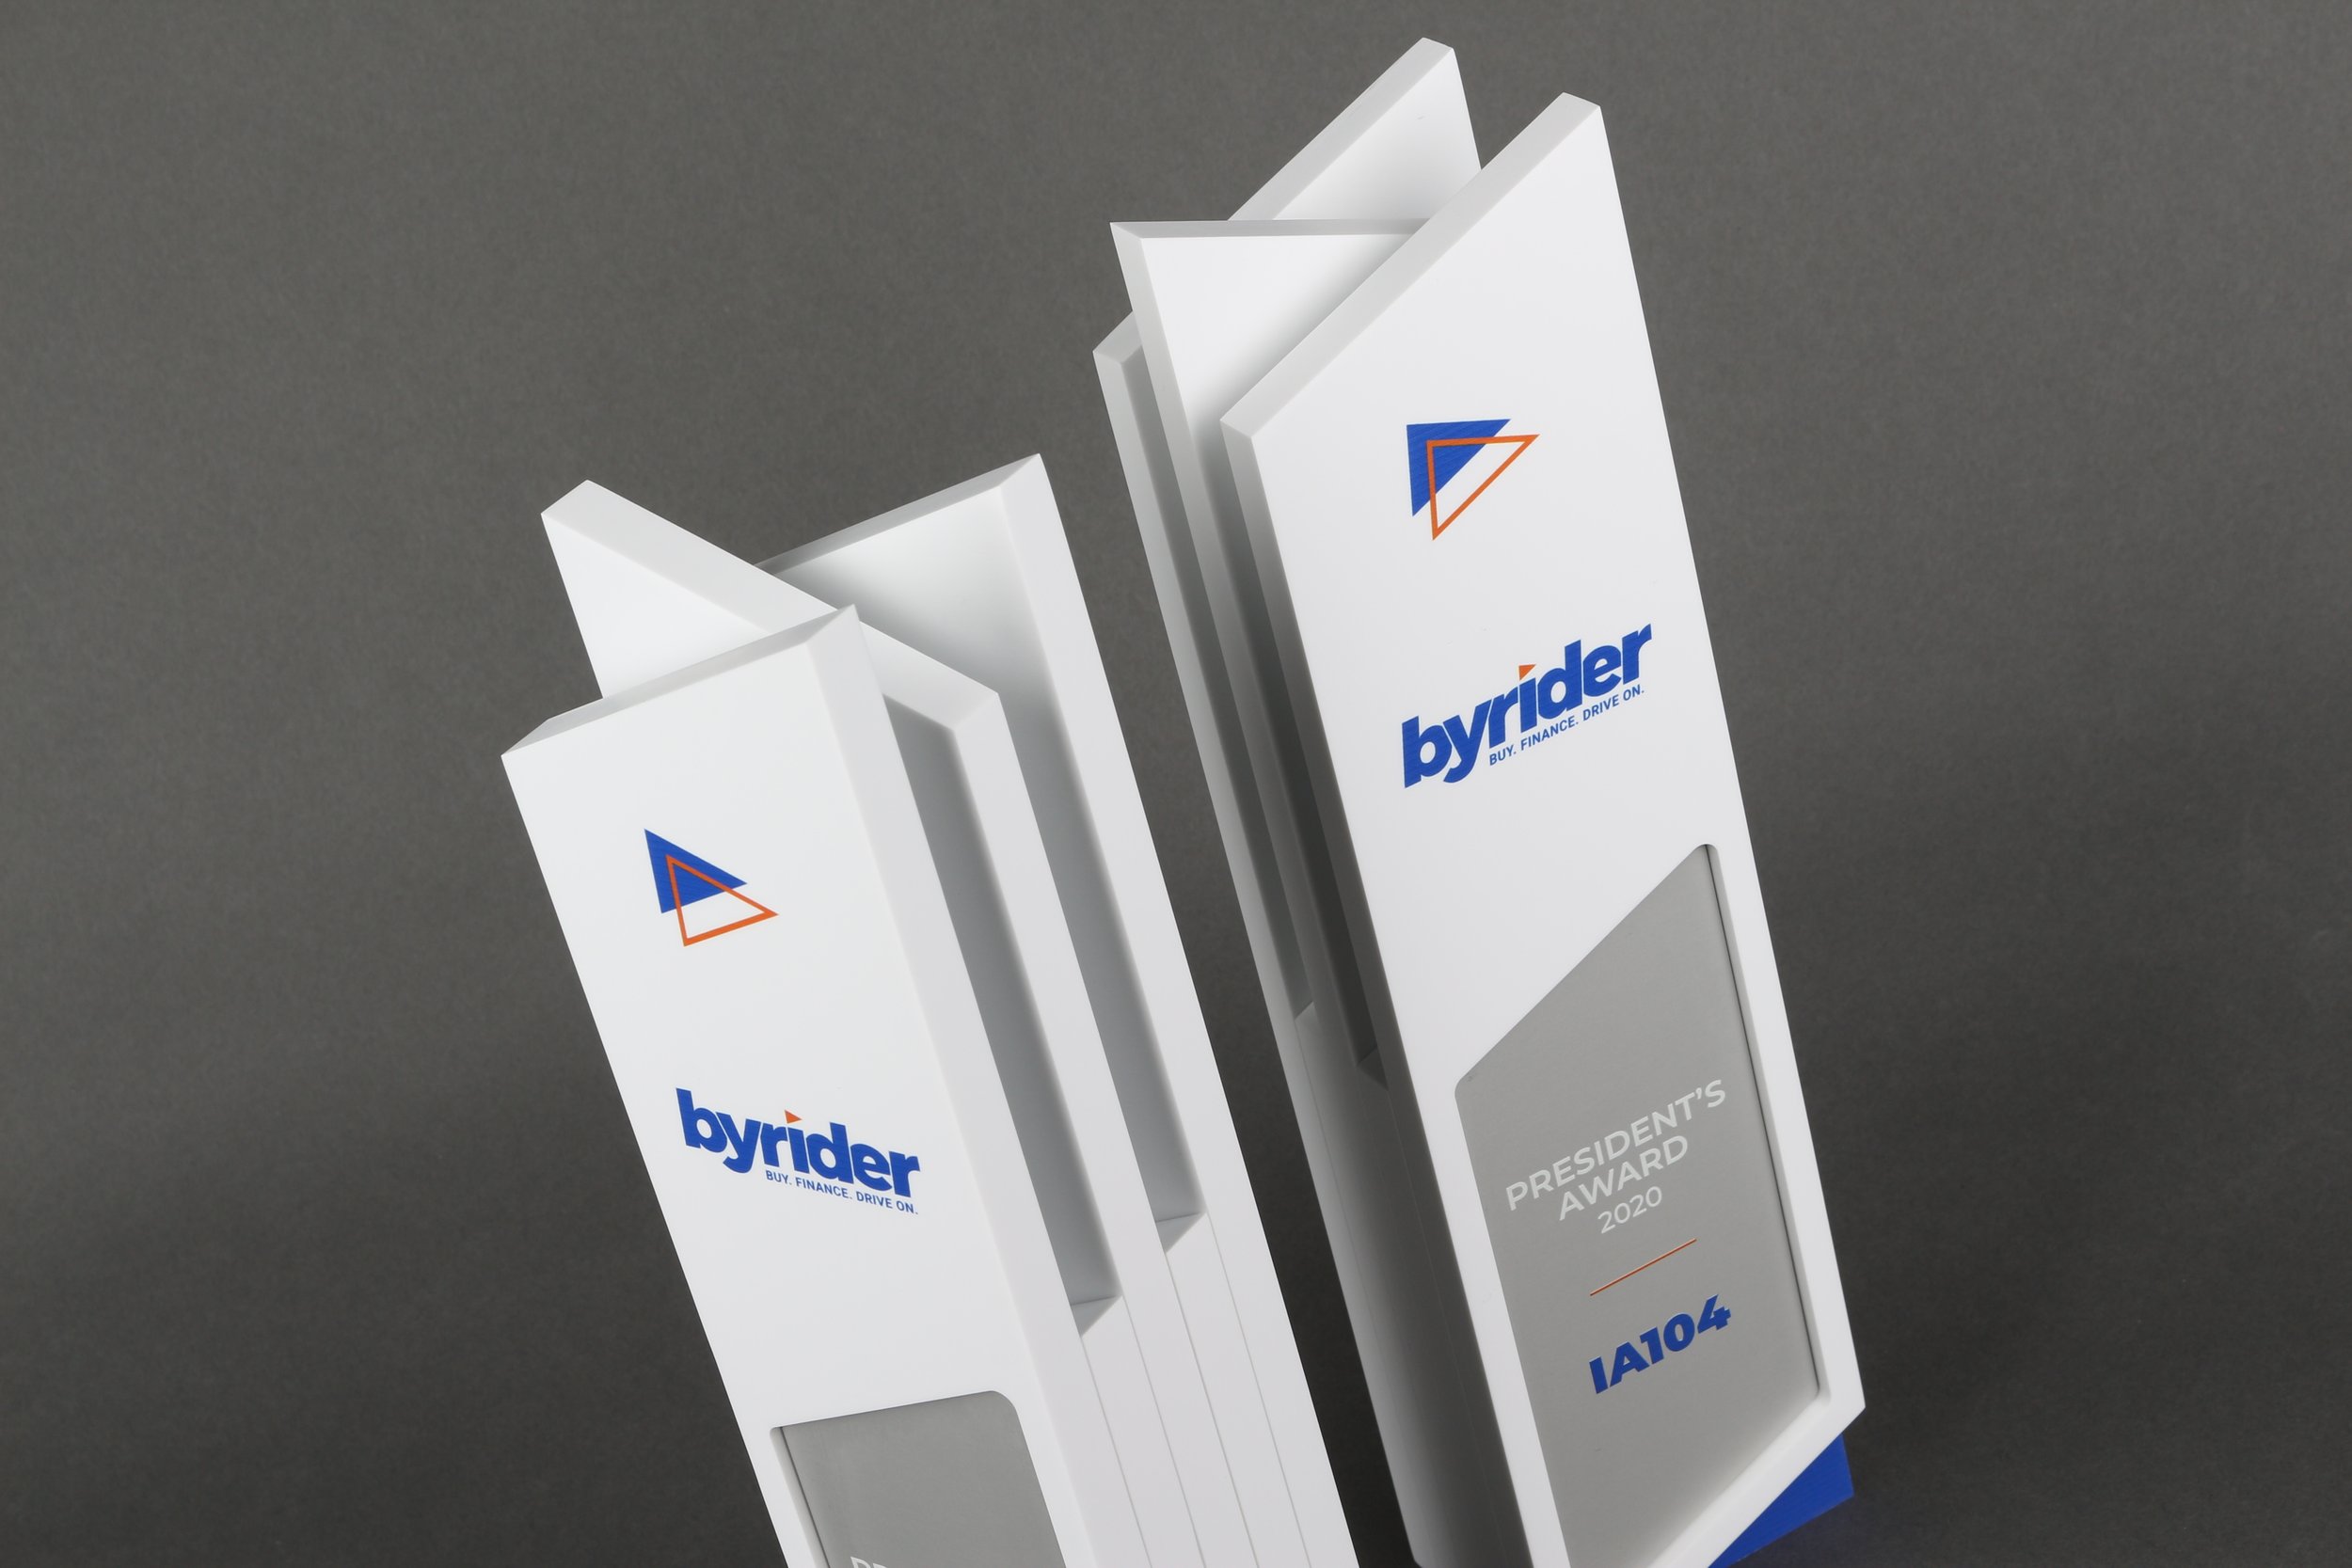 byrider annual conference awards custom design